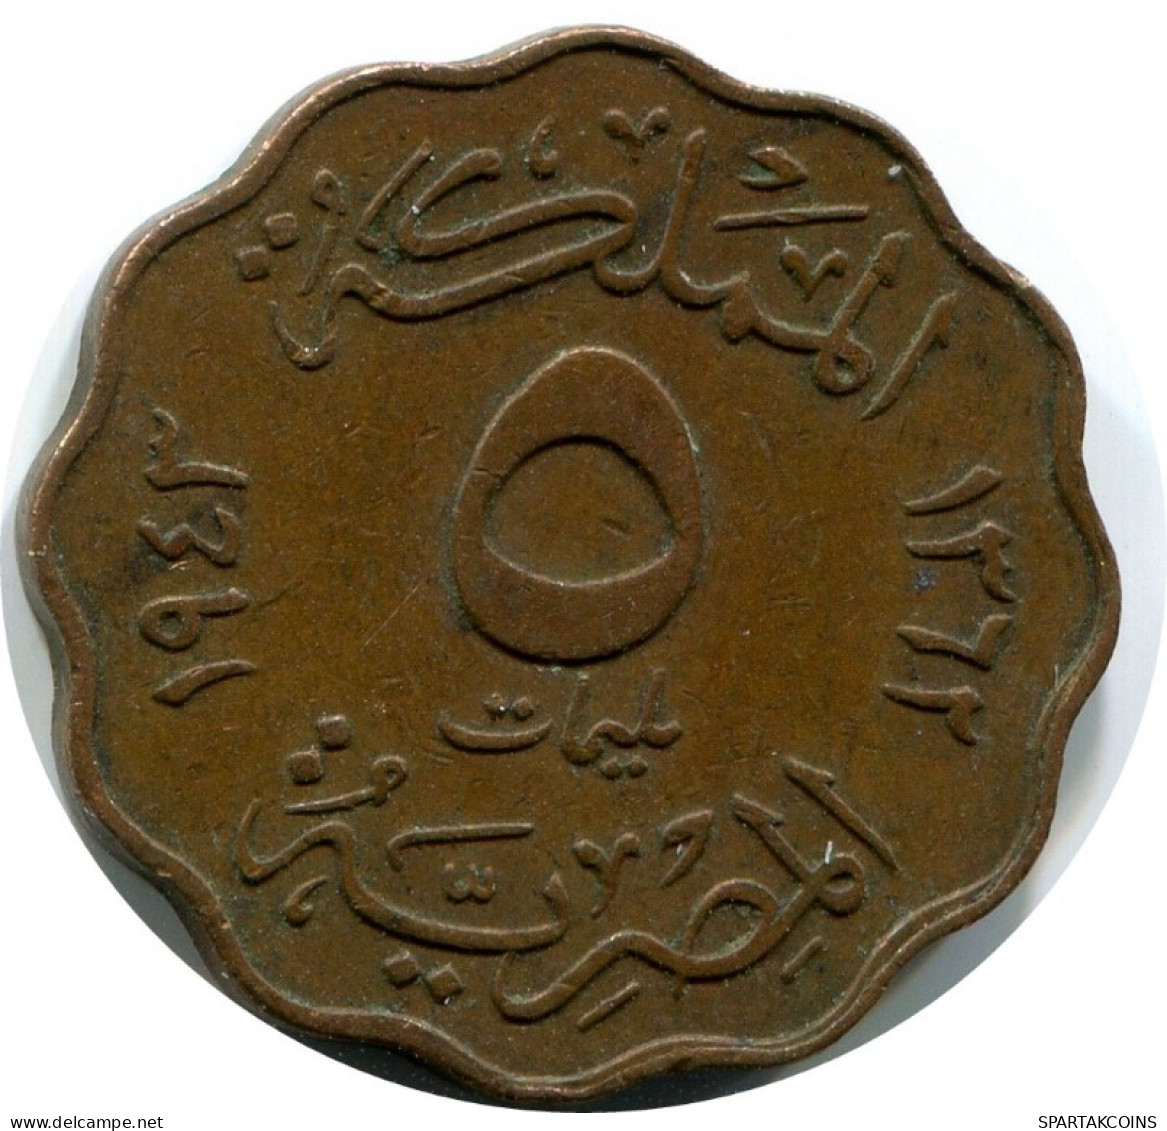 5 MILLIEMES 1943 ÄGYPTEN EGYPT Islamisch Münze #AK256.D.A - Egypt